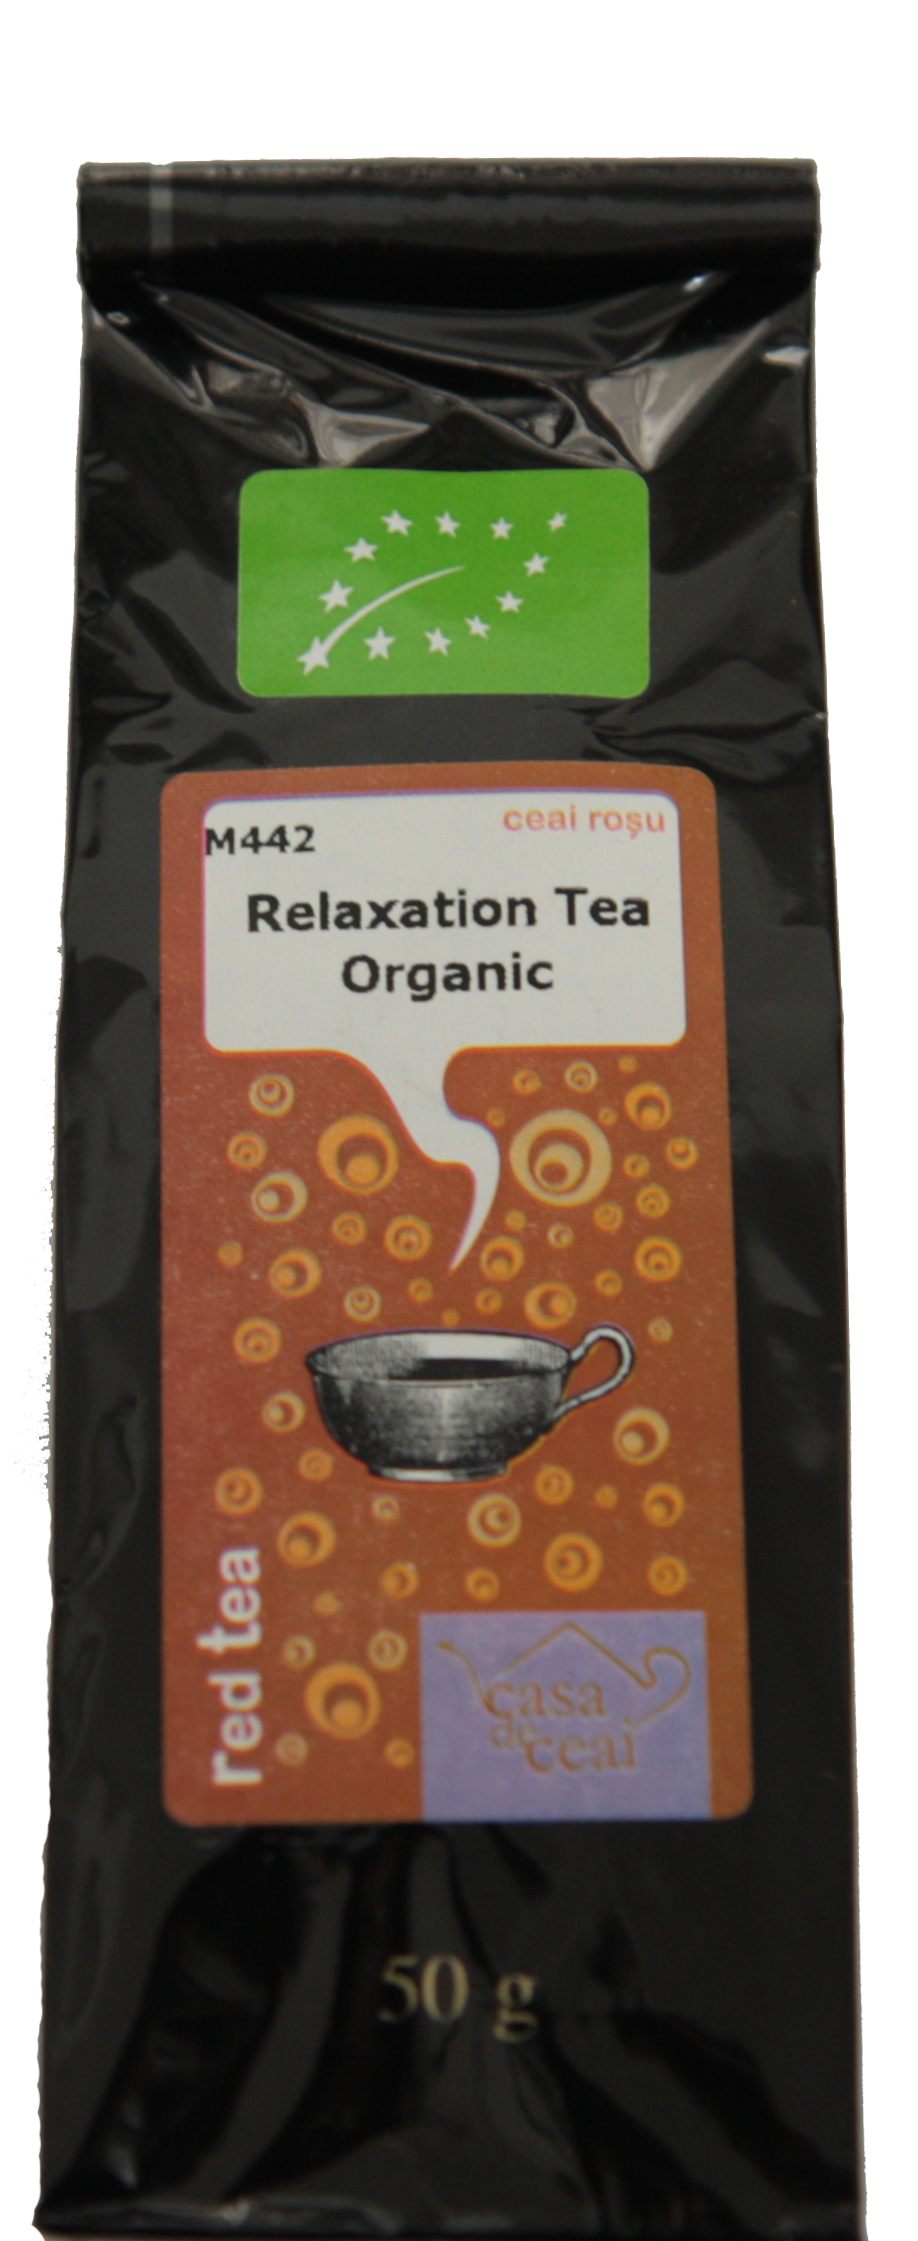 M442 Relaxation Tea Organic | Casa de ceai